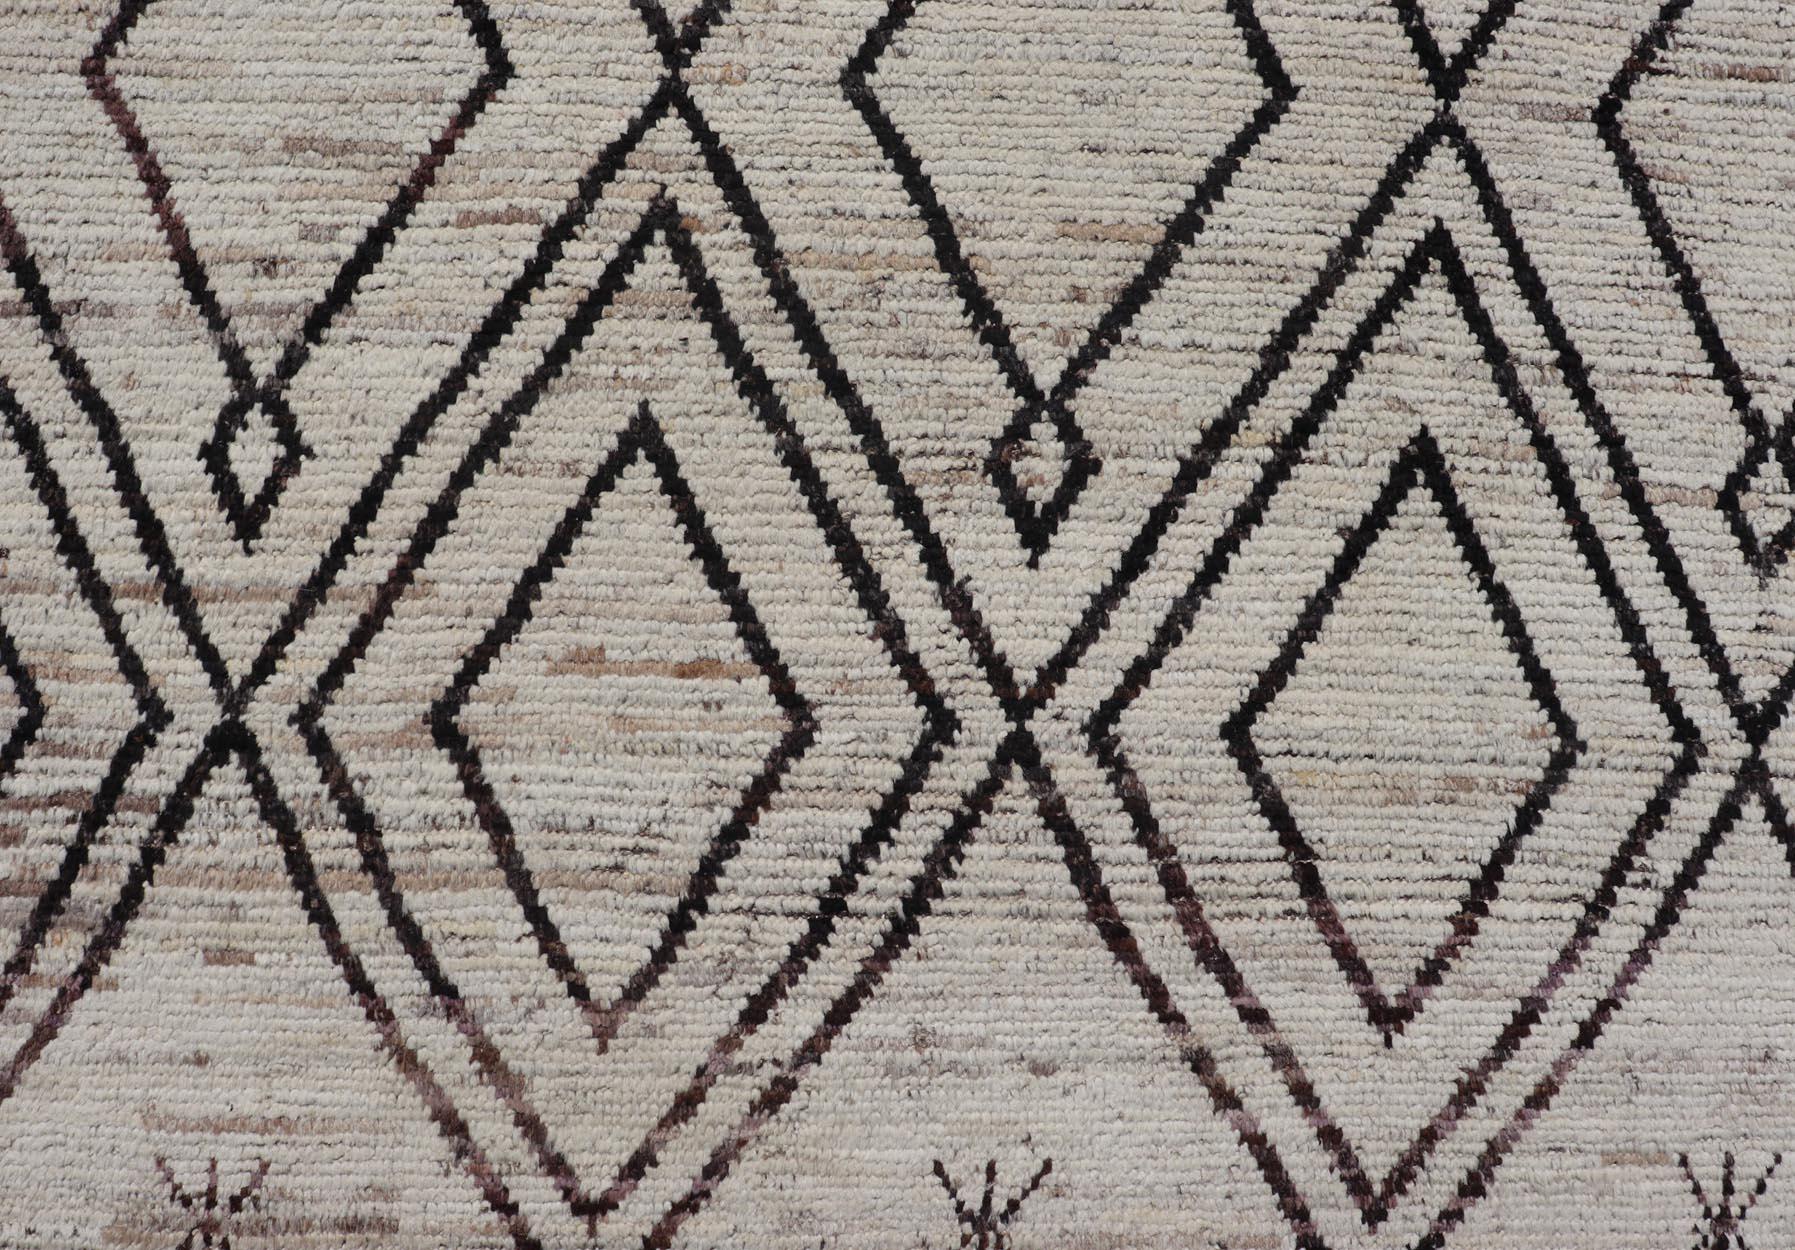  Tribal Moroccan Modern Rug in Wool with Geometric Diamond Design  For Sale 2